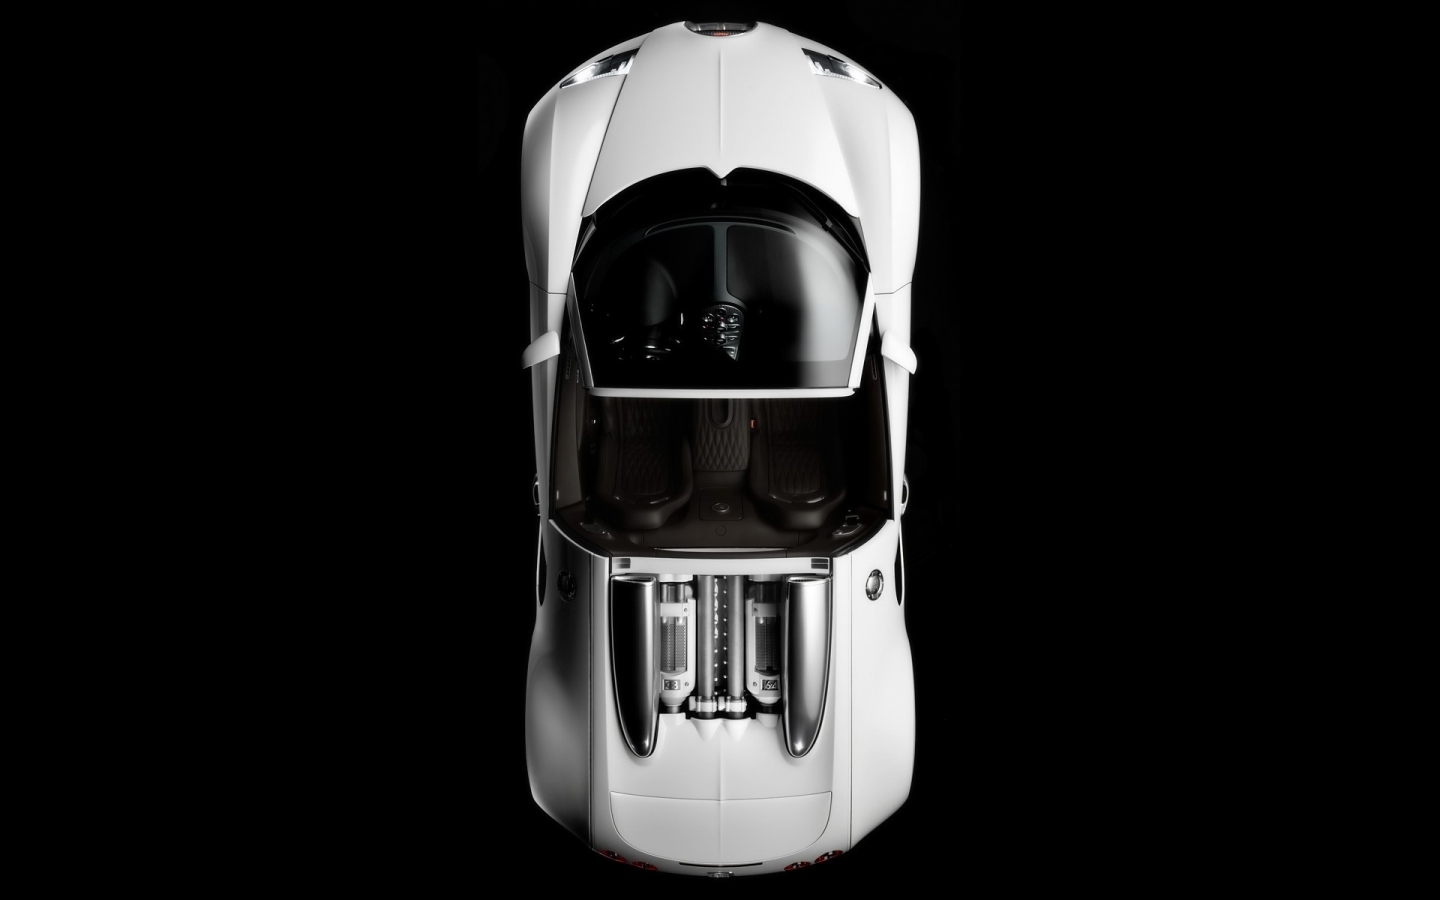 Bugatti Veyron 16.4 Grand Sport Production Version 2009 - Studio Top for 1440 x 900 widescreen resolution